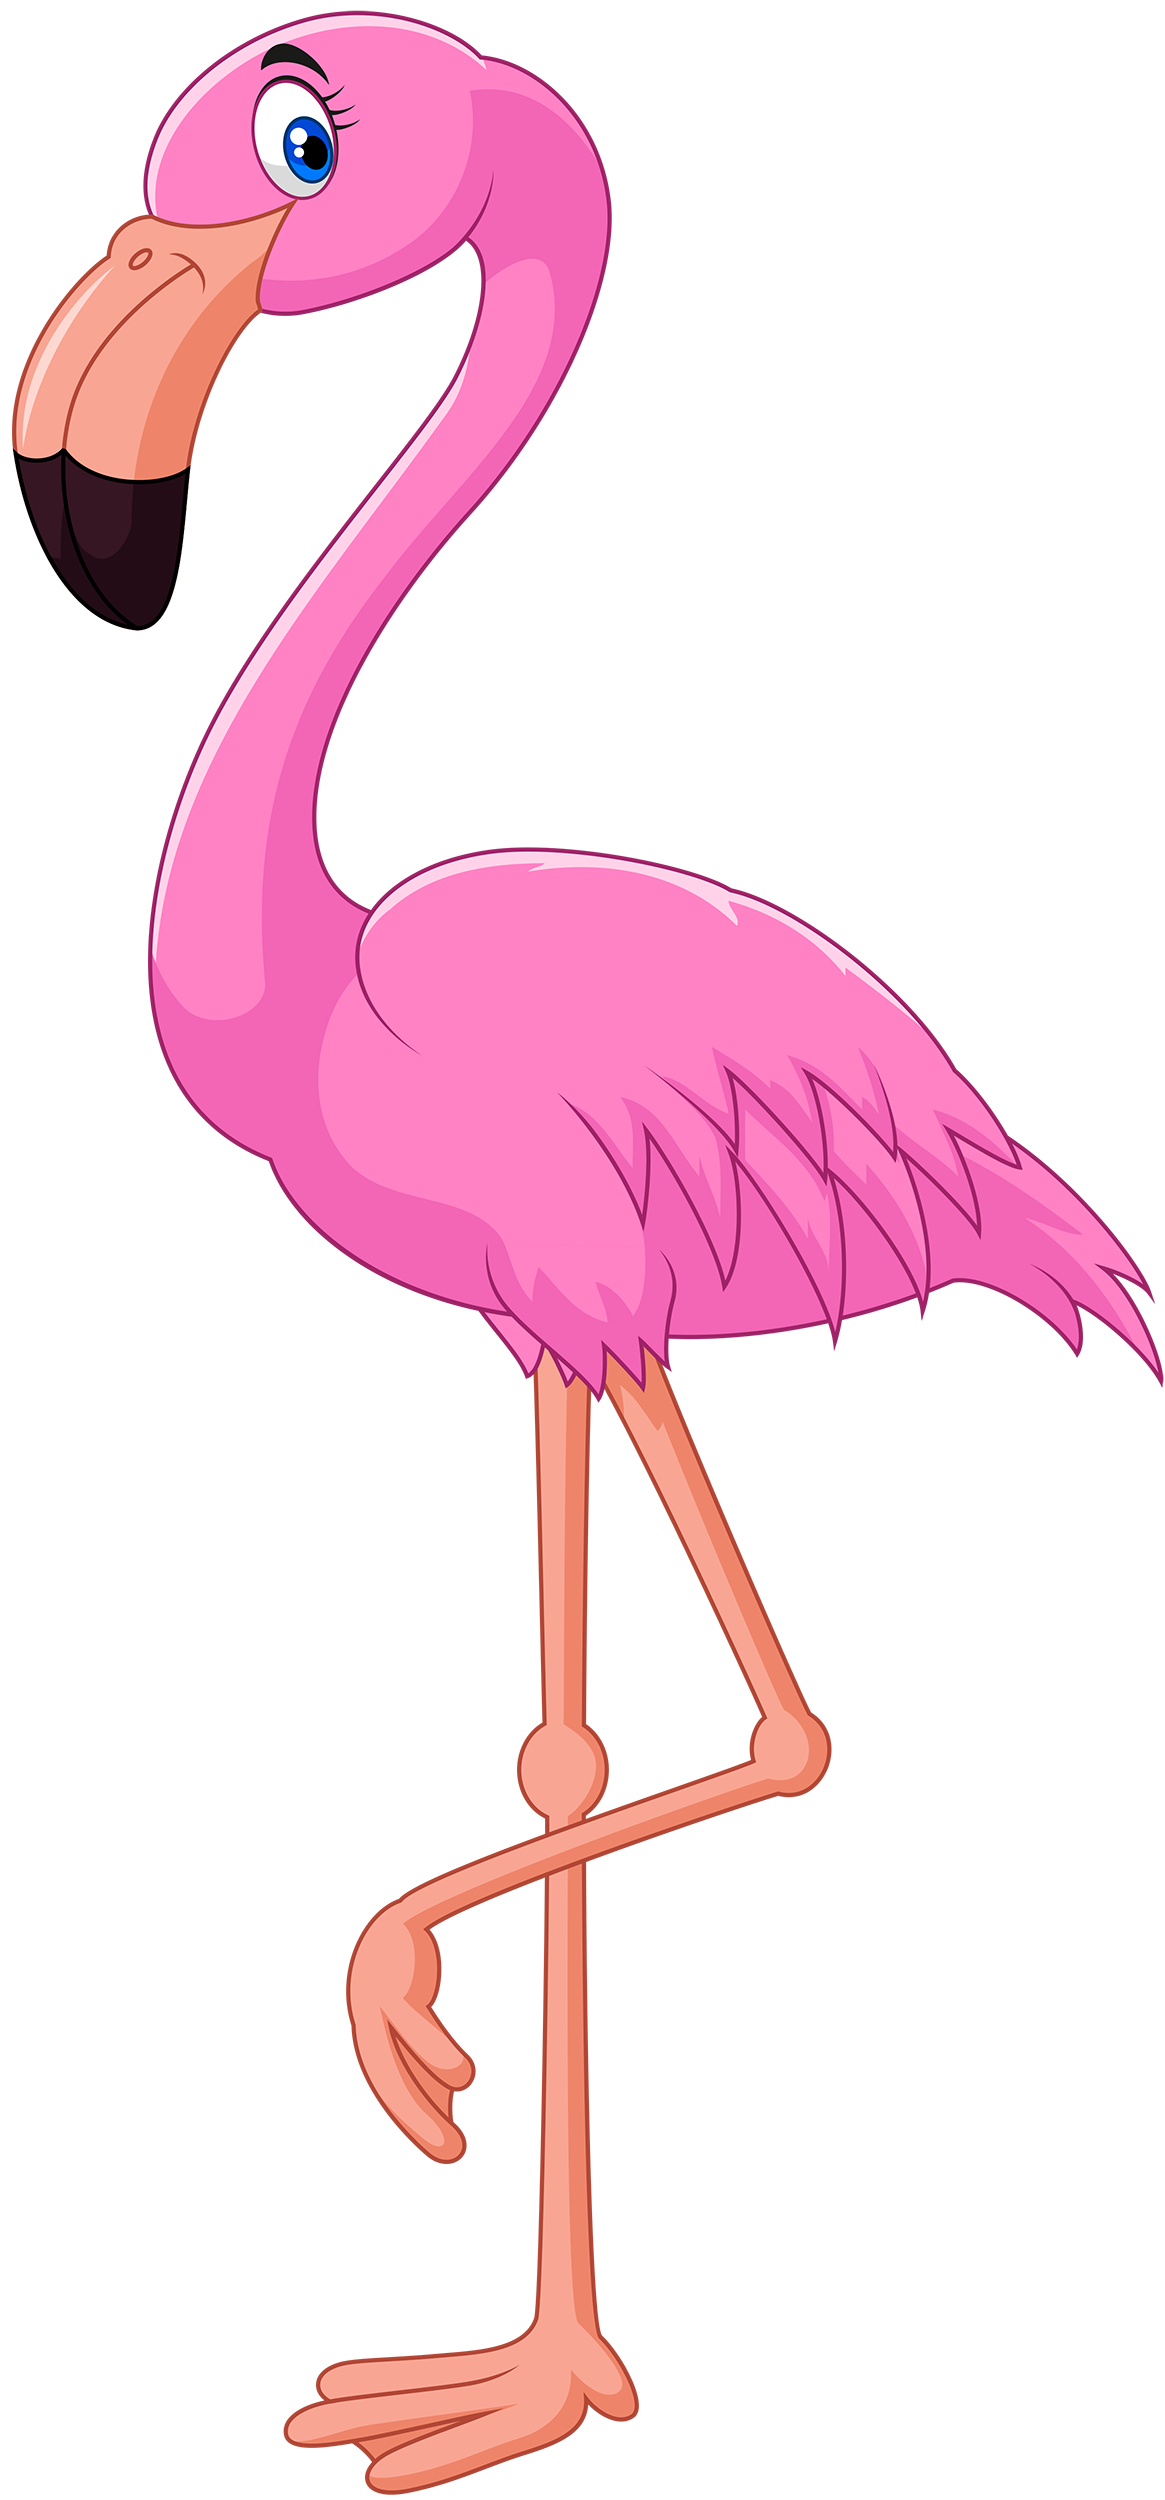 Flamingo head silhouette clipart